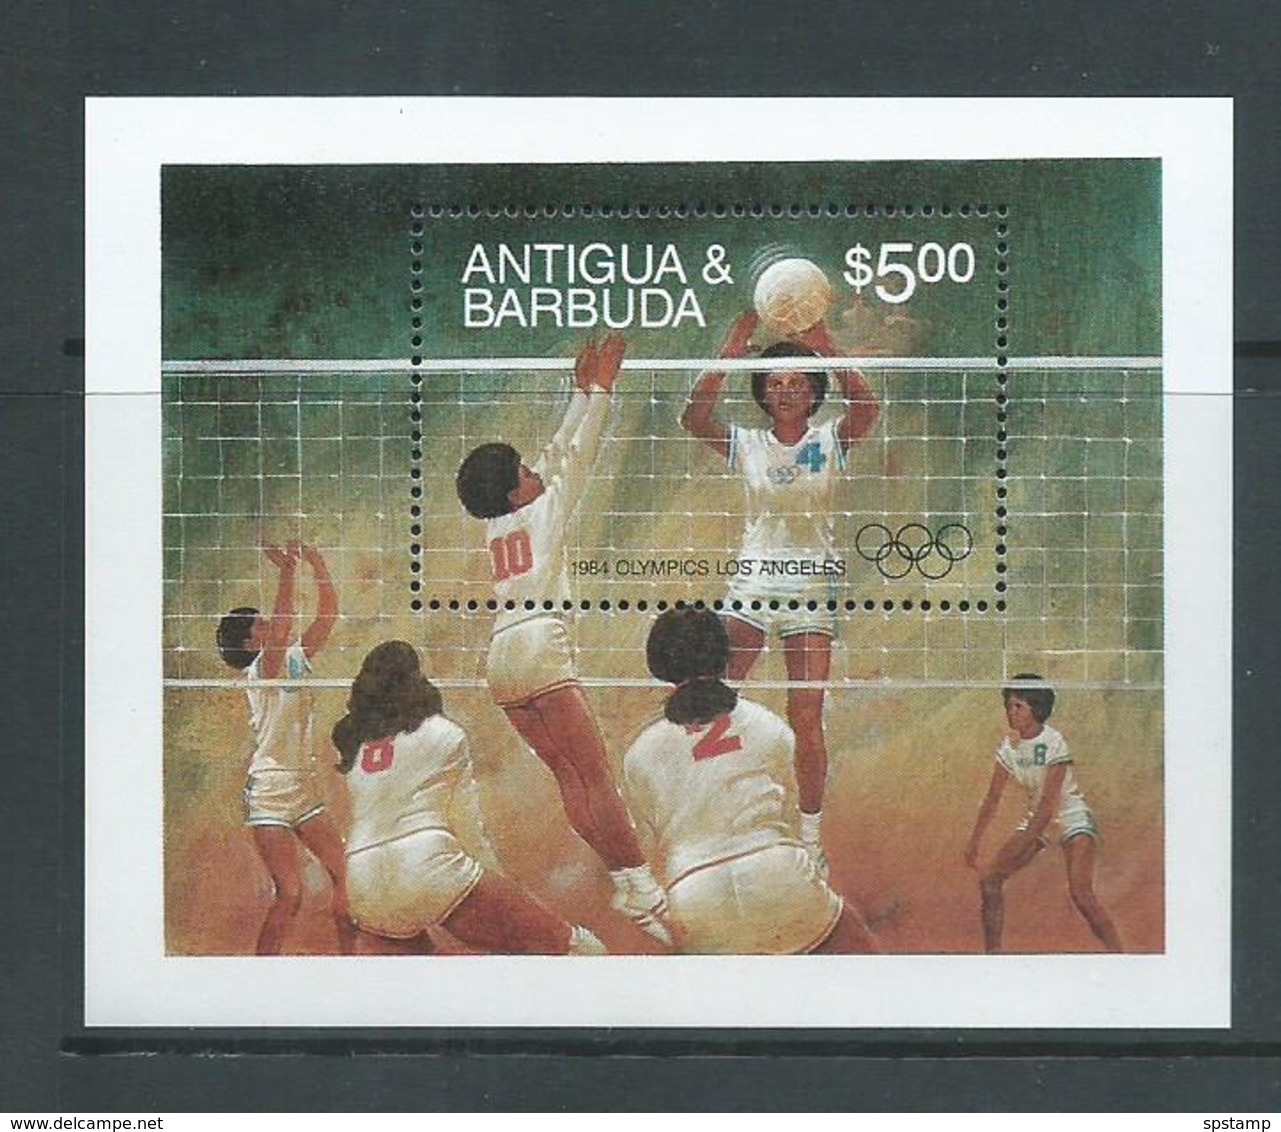 Antigua & Barbuda 1984 Los Angeles Olympic Games Volleyball Miniature Sheet MNH - Antigua And Barbuda (1981-...)